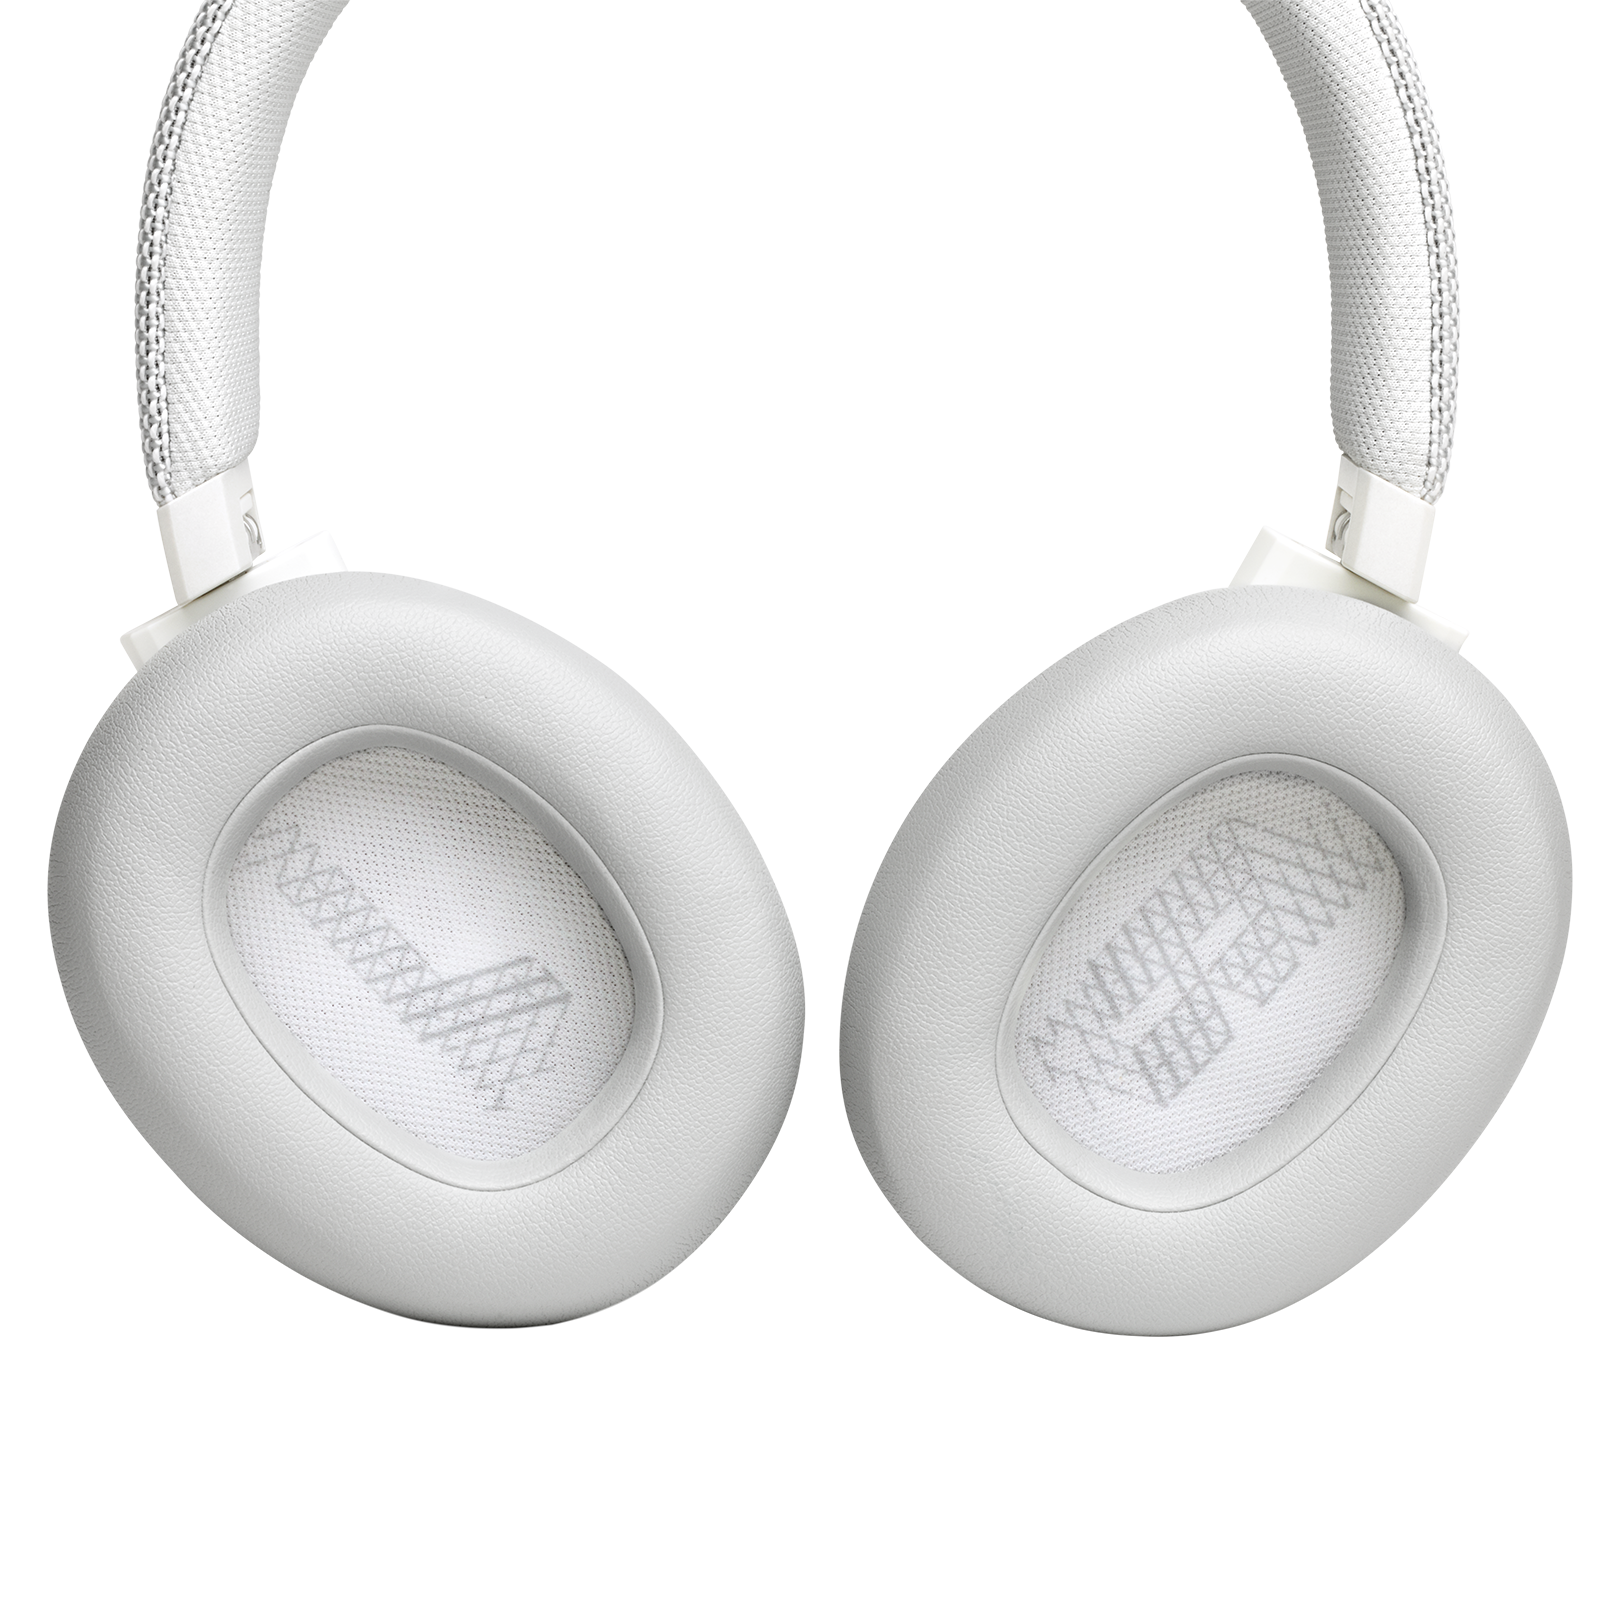 JBL Live 650BTNC - White - Wireless Over-Ear Noise-Cancelling Headphones - Detailshot 3